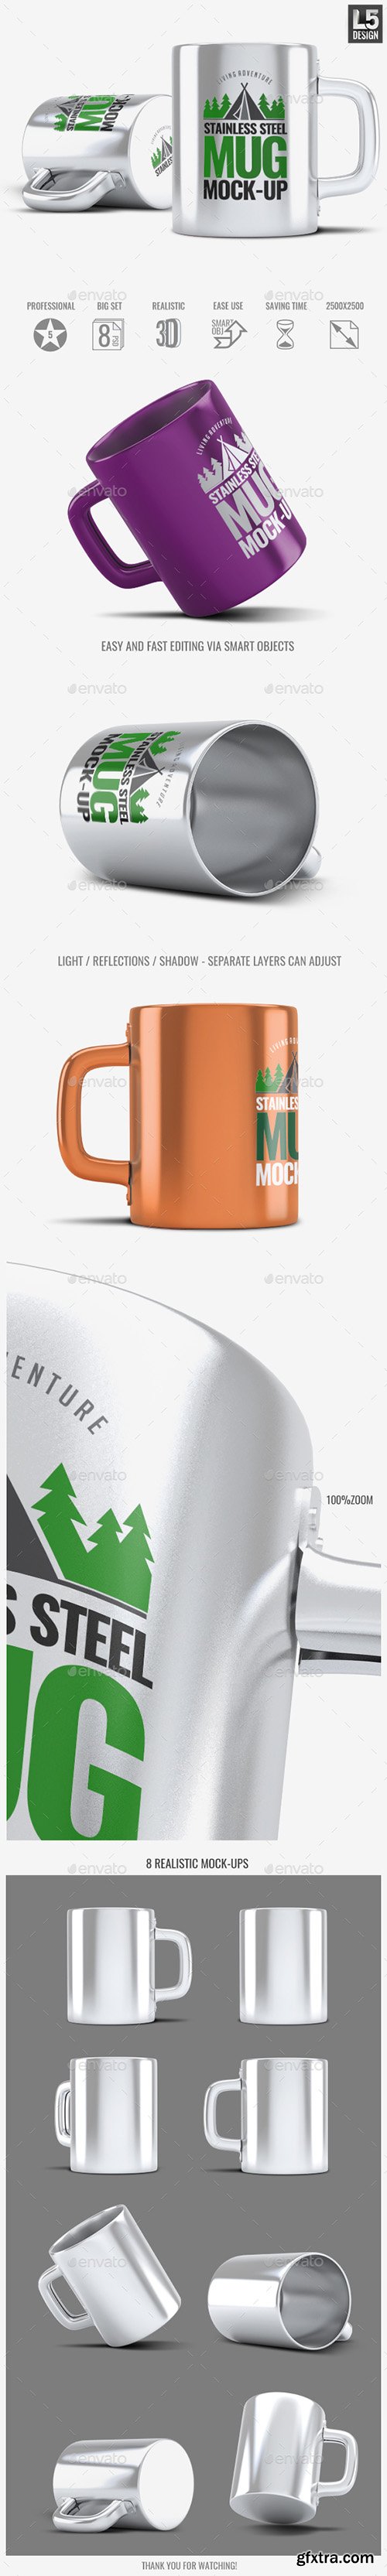 Graphicriver Stainless Steel Mug Mock-Up 17089936